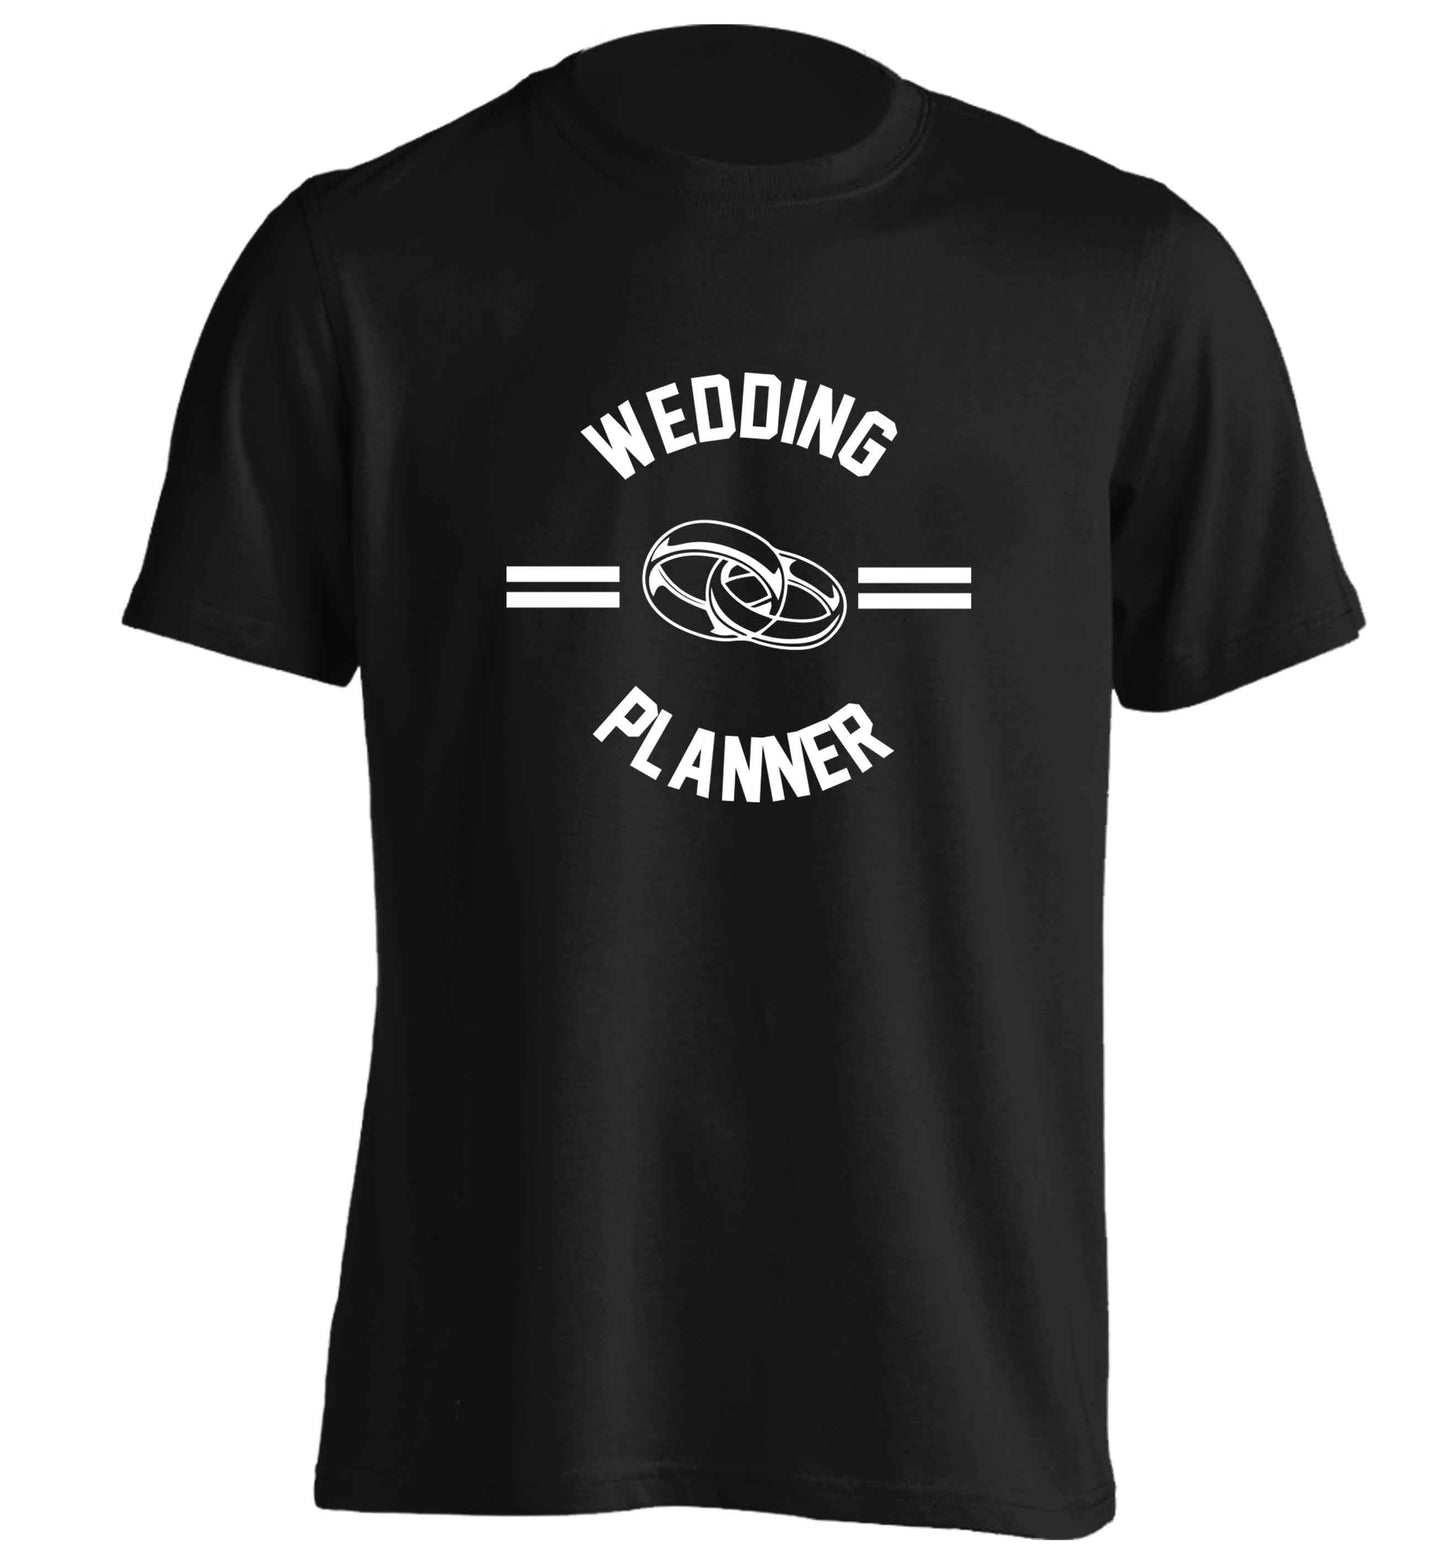 Wedding planner adults unisex black Tshirt 2XL